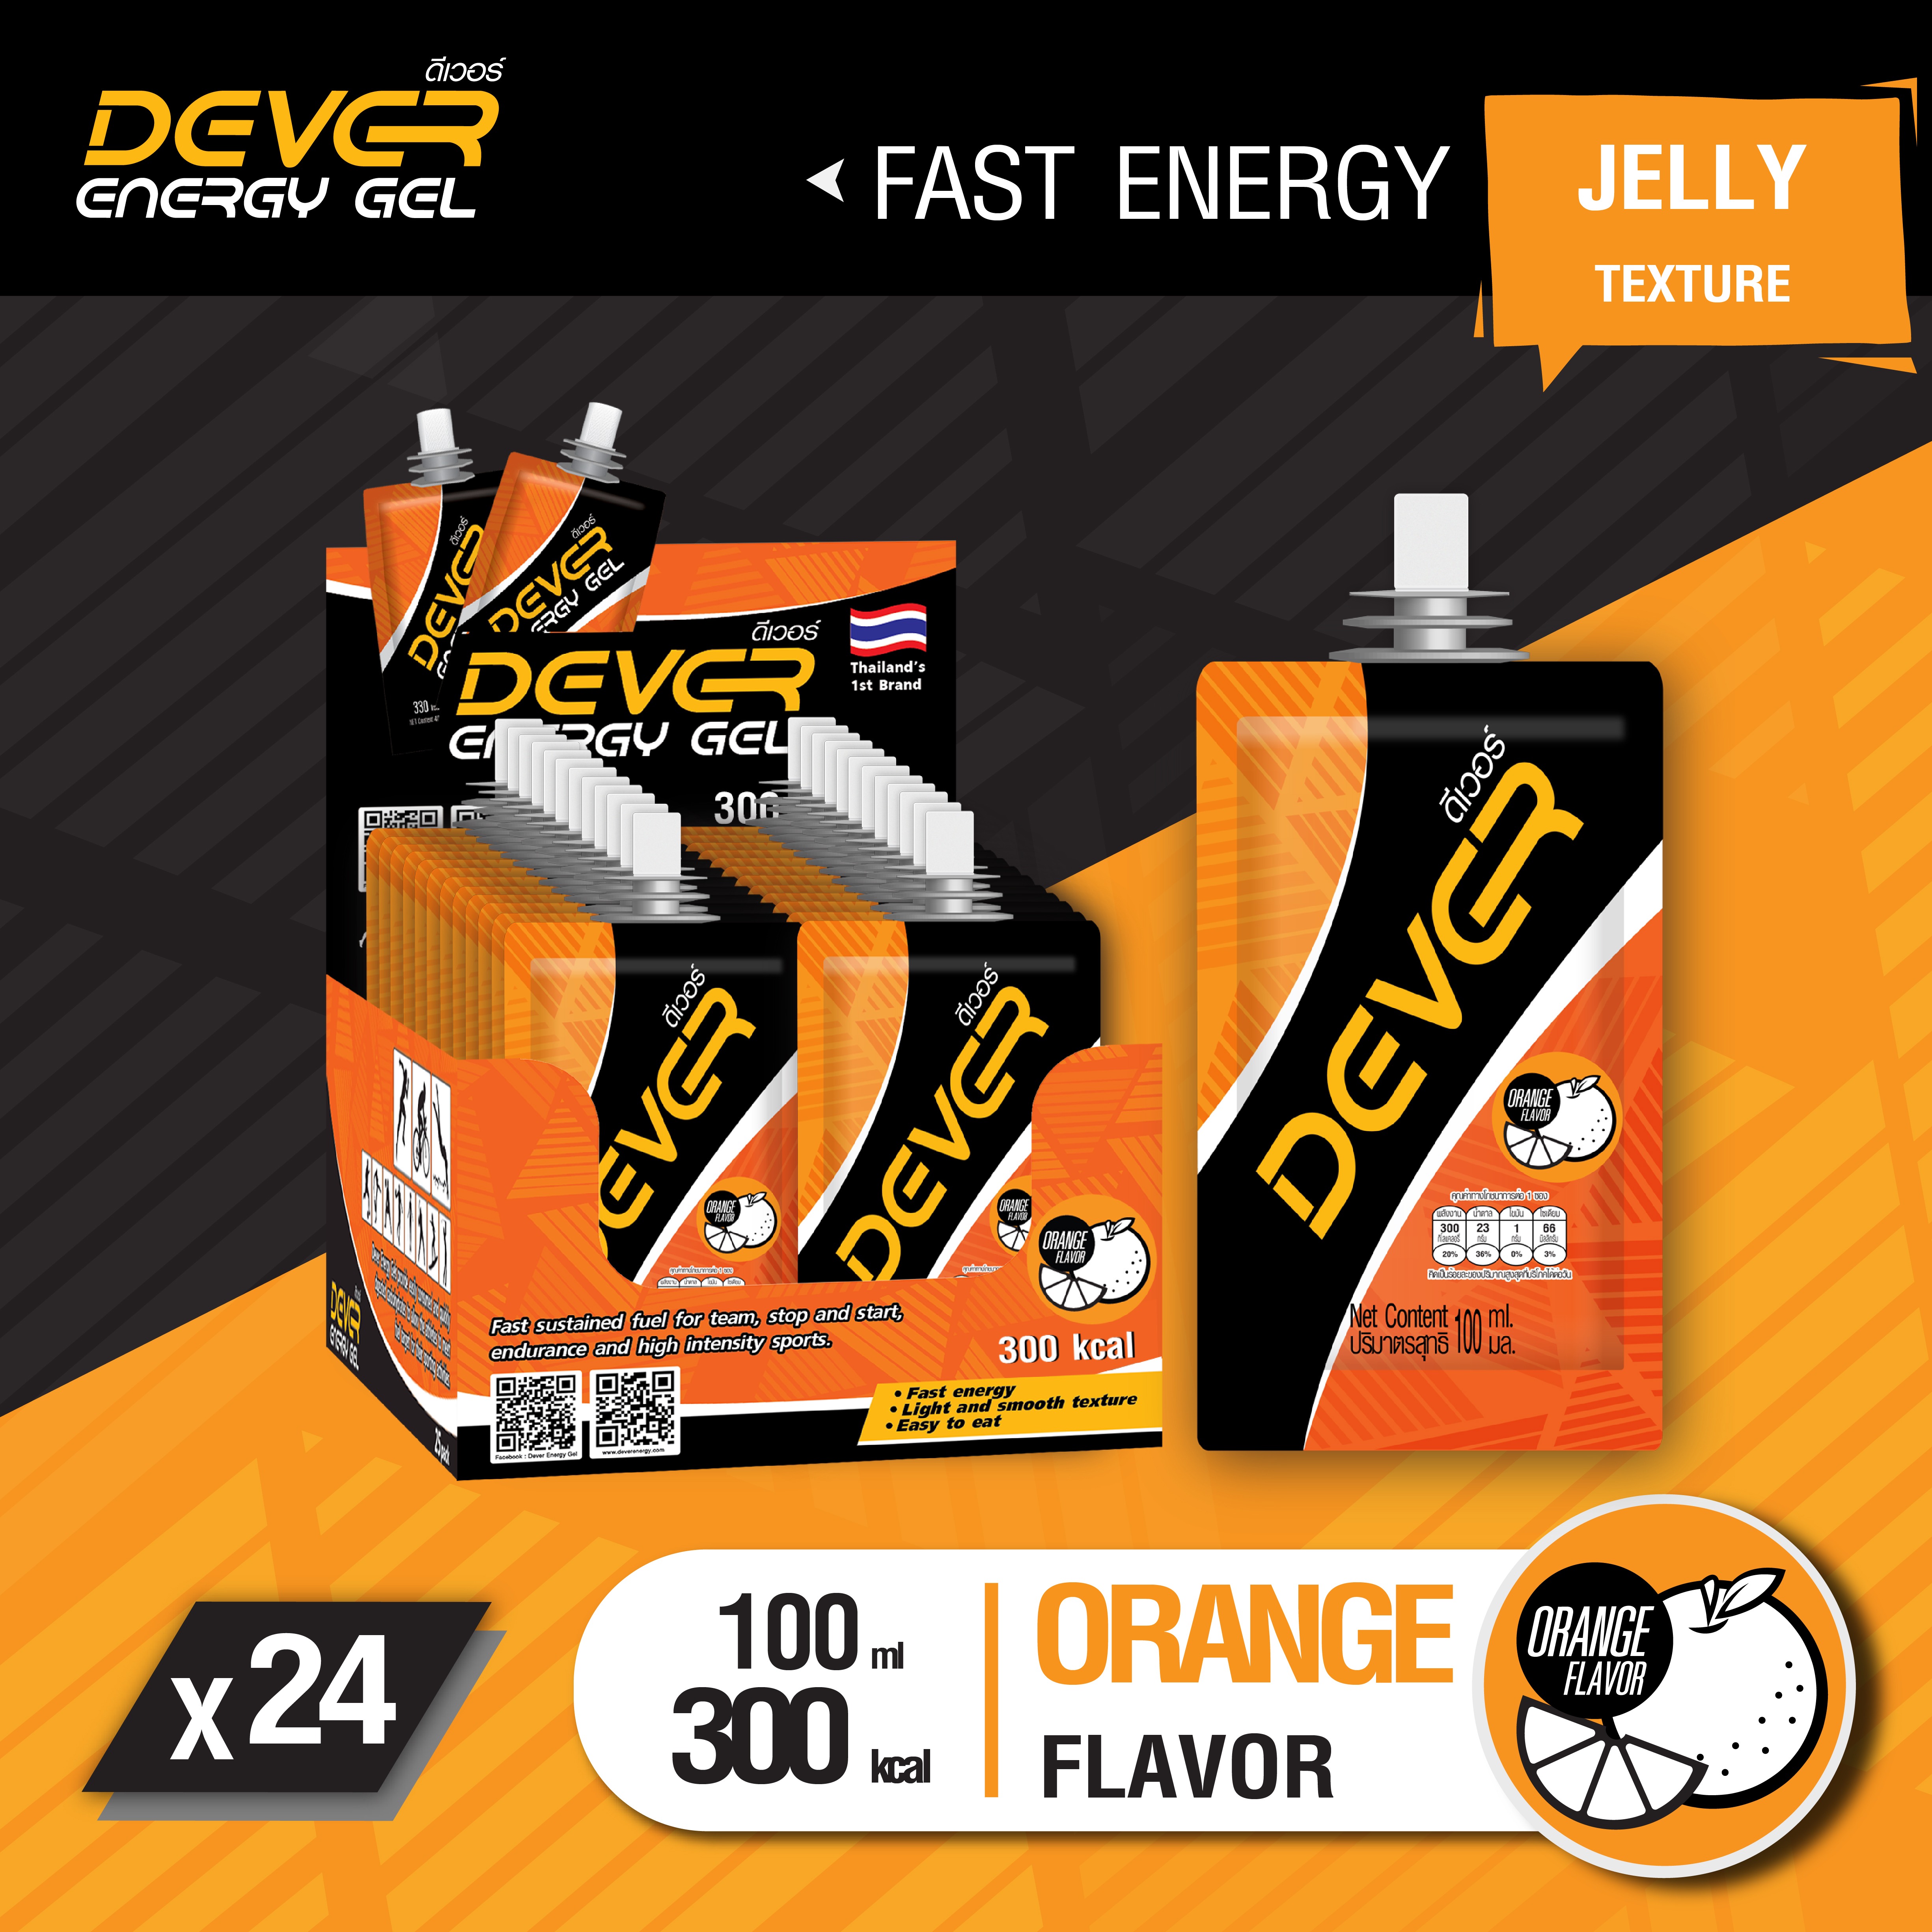 DEVER (vital energy) เจลพลังงานพร้อมทาน ทานง่าย เพิ่มพลังงาน สารอาหารสำหรับนักกีฬา เครื่องดื่มให้พลังงาน นักกีฬา ดีเวอร์ 300 kcal > 100 ML ส้ม 24 ซอง